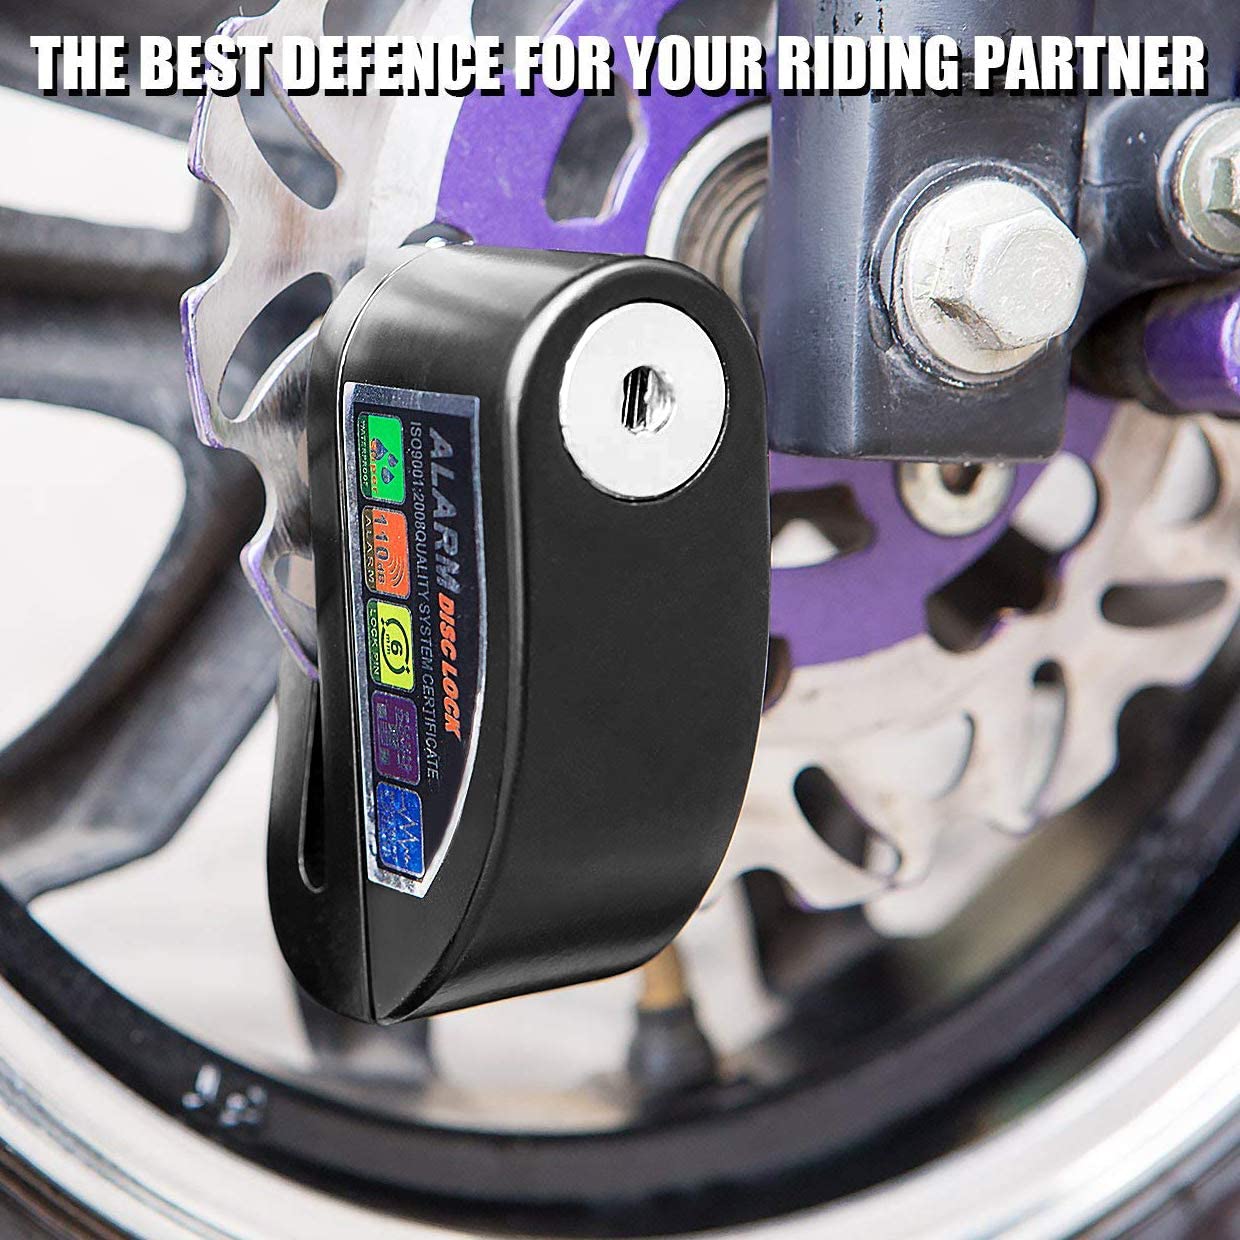 GADLANE Motorbike Alarm Disc Lock